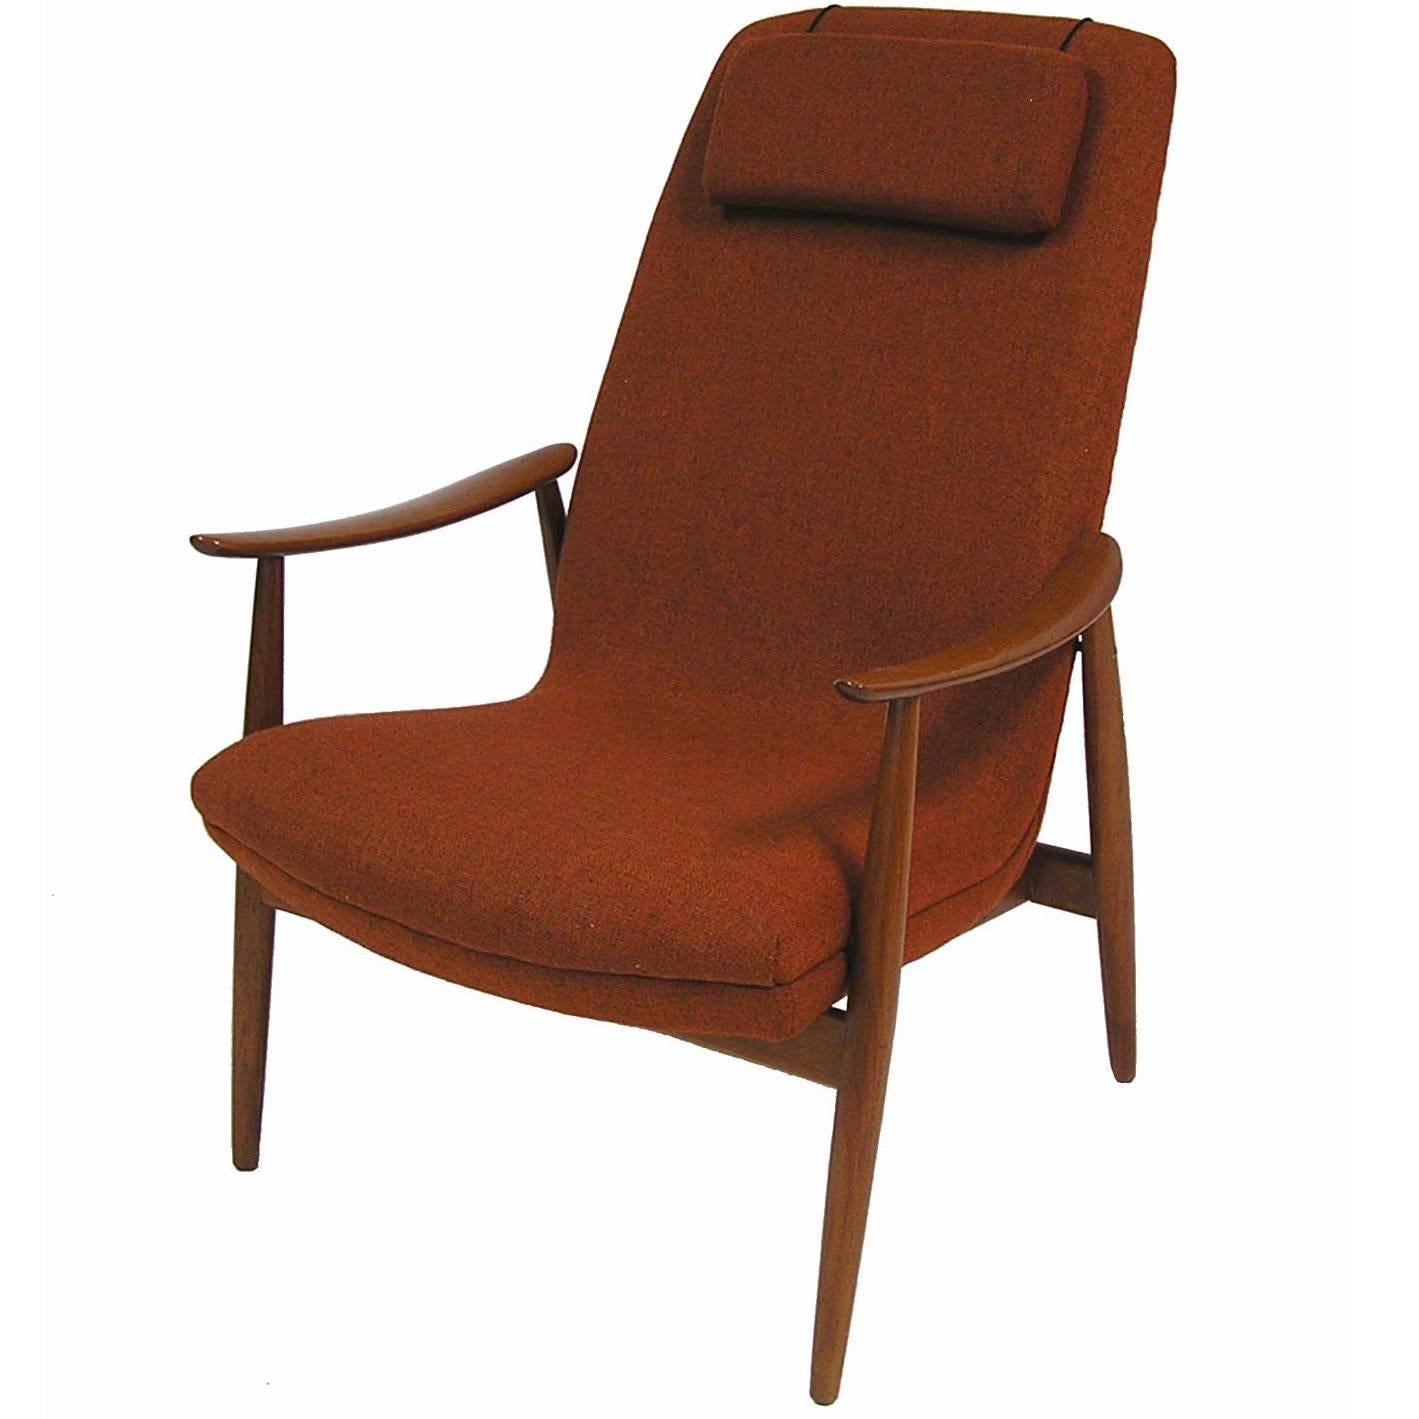 1960s Teak Lounge Chair by Ingmar Relling for Westnofa